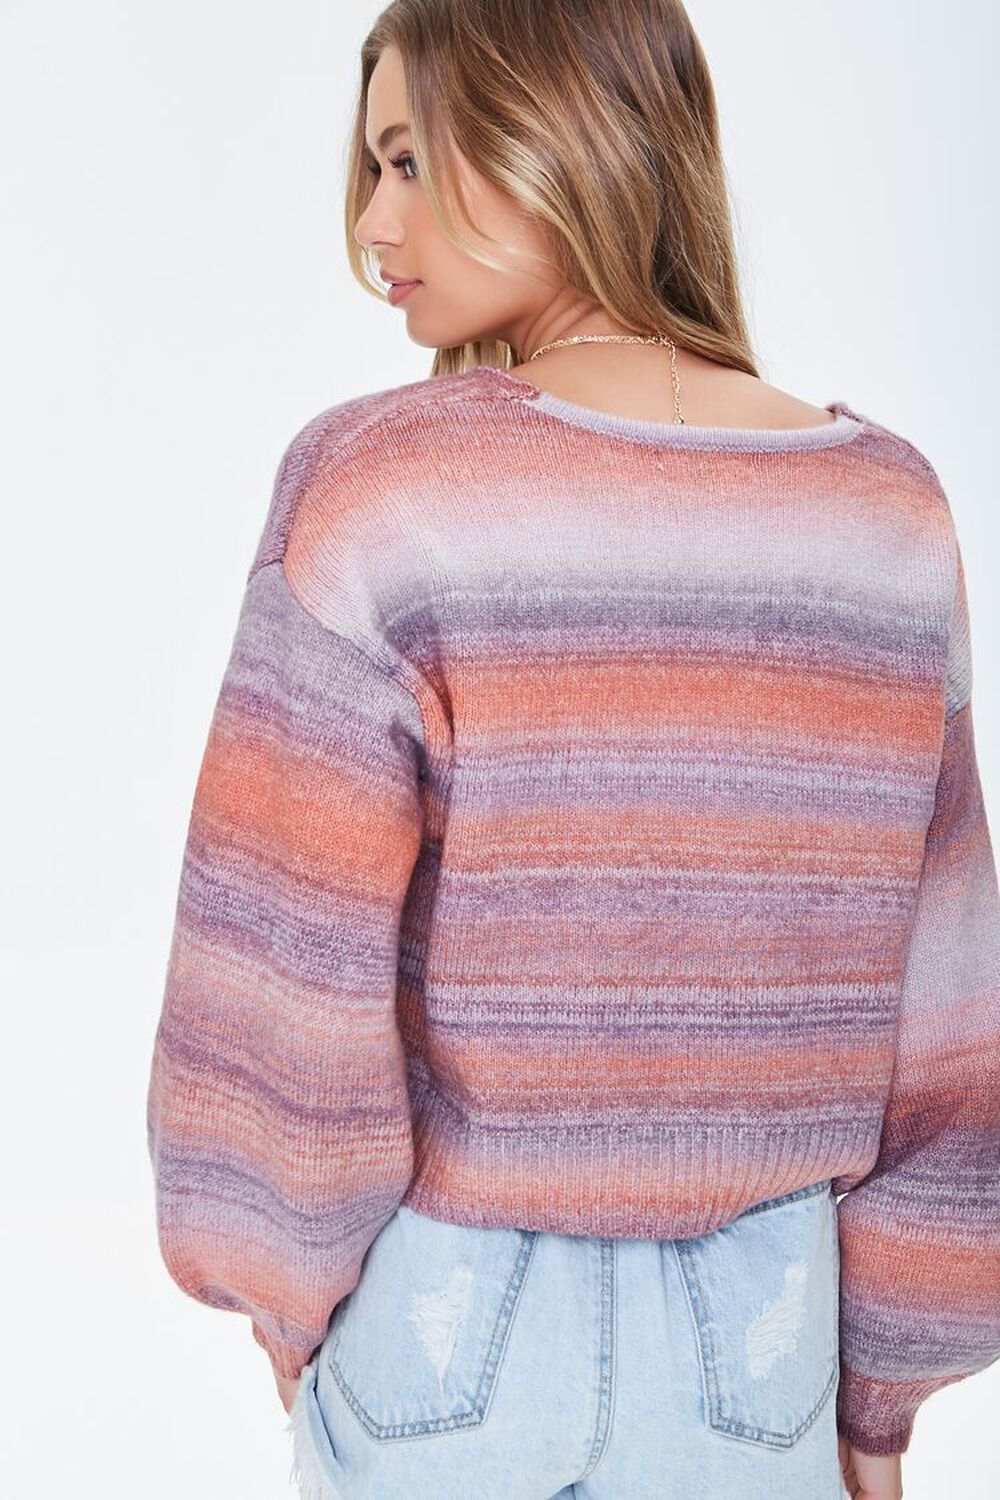 RUST/MULTI Striped V-Neck Sweater, image 3